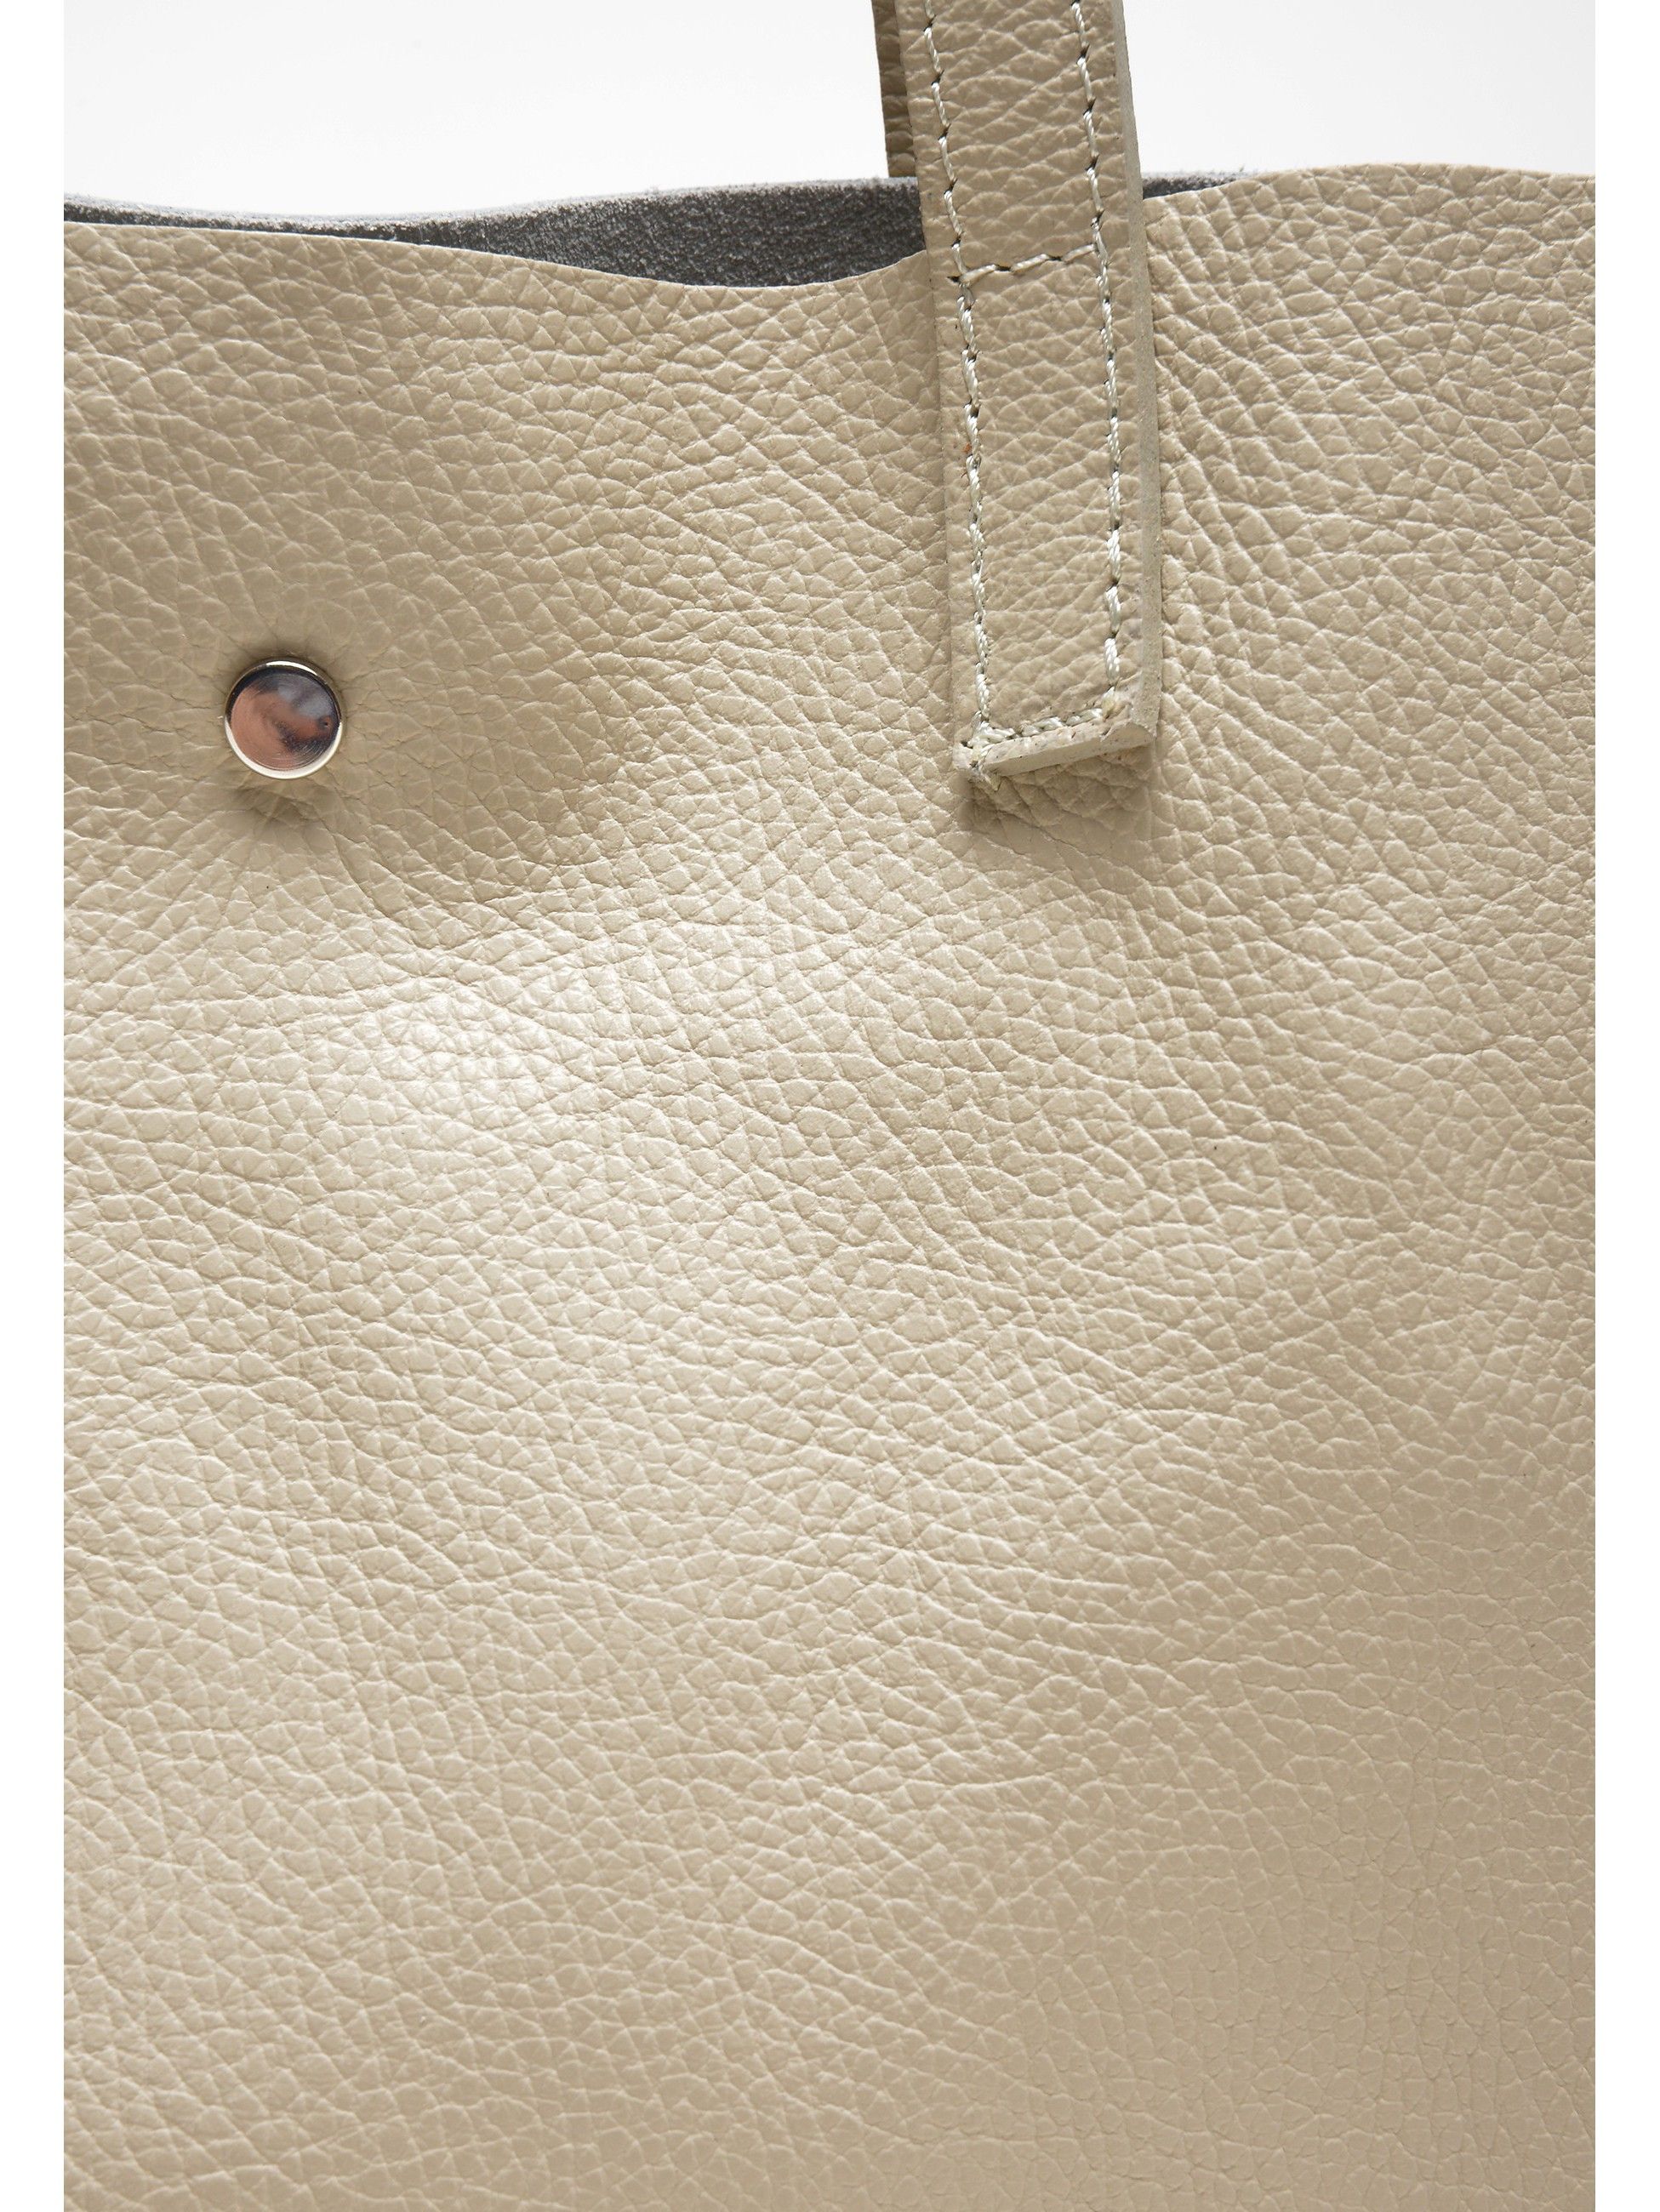 Shoulder Bag
100% cow leather
Two top handles 60 cm
Top magnetic snap closure
Interior zip pocket
Dimensions: 33x31x9 cm